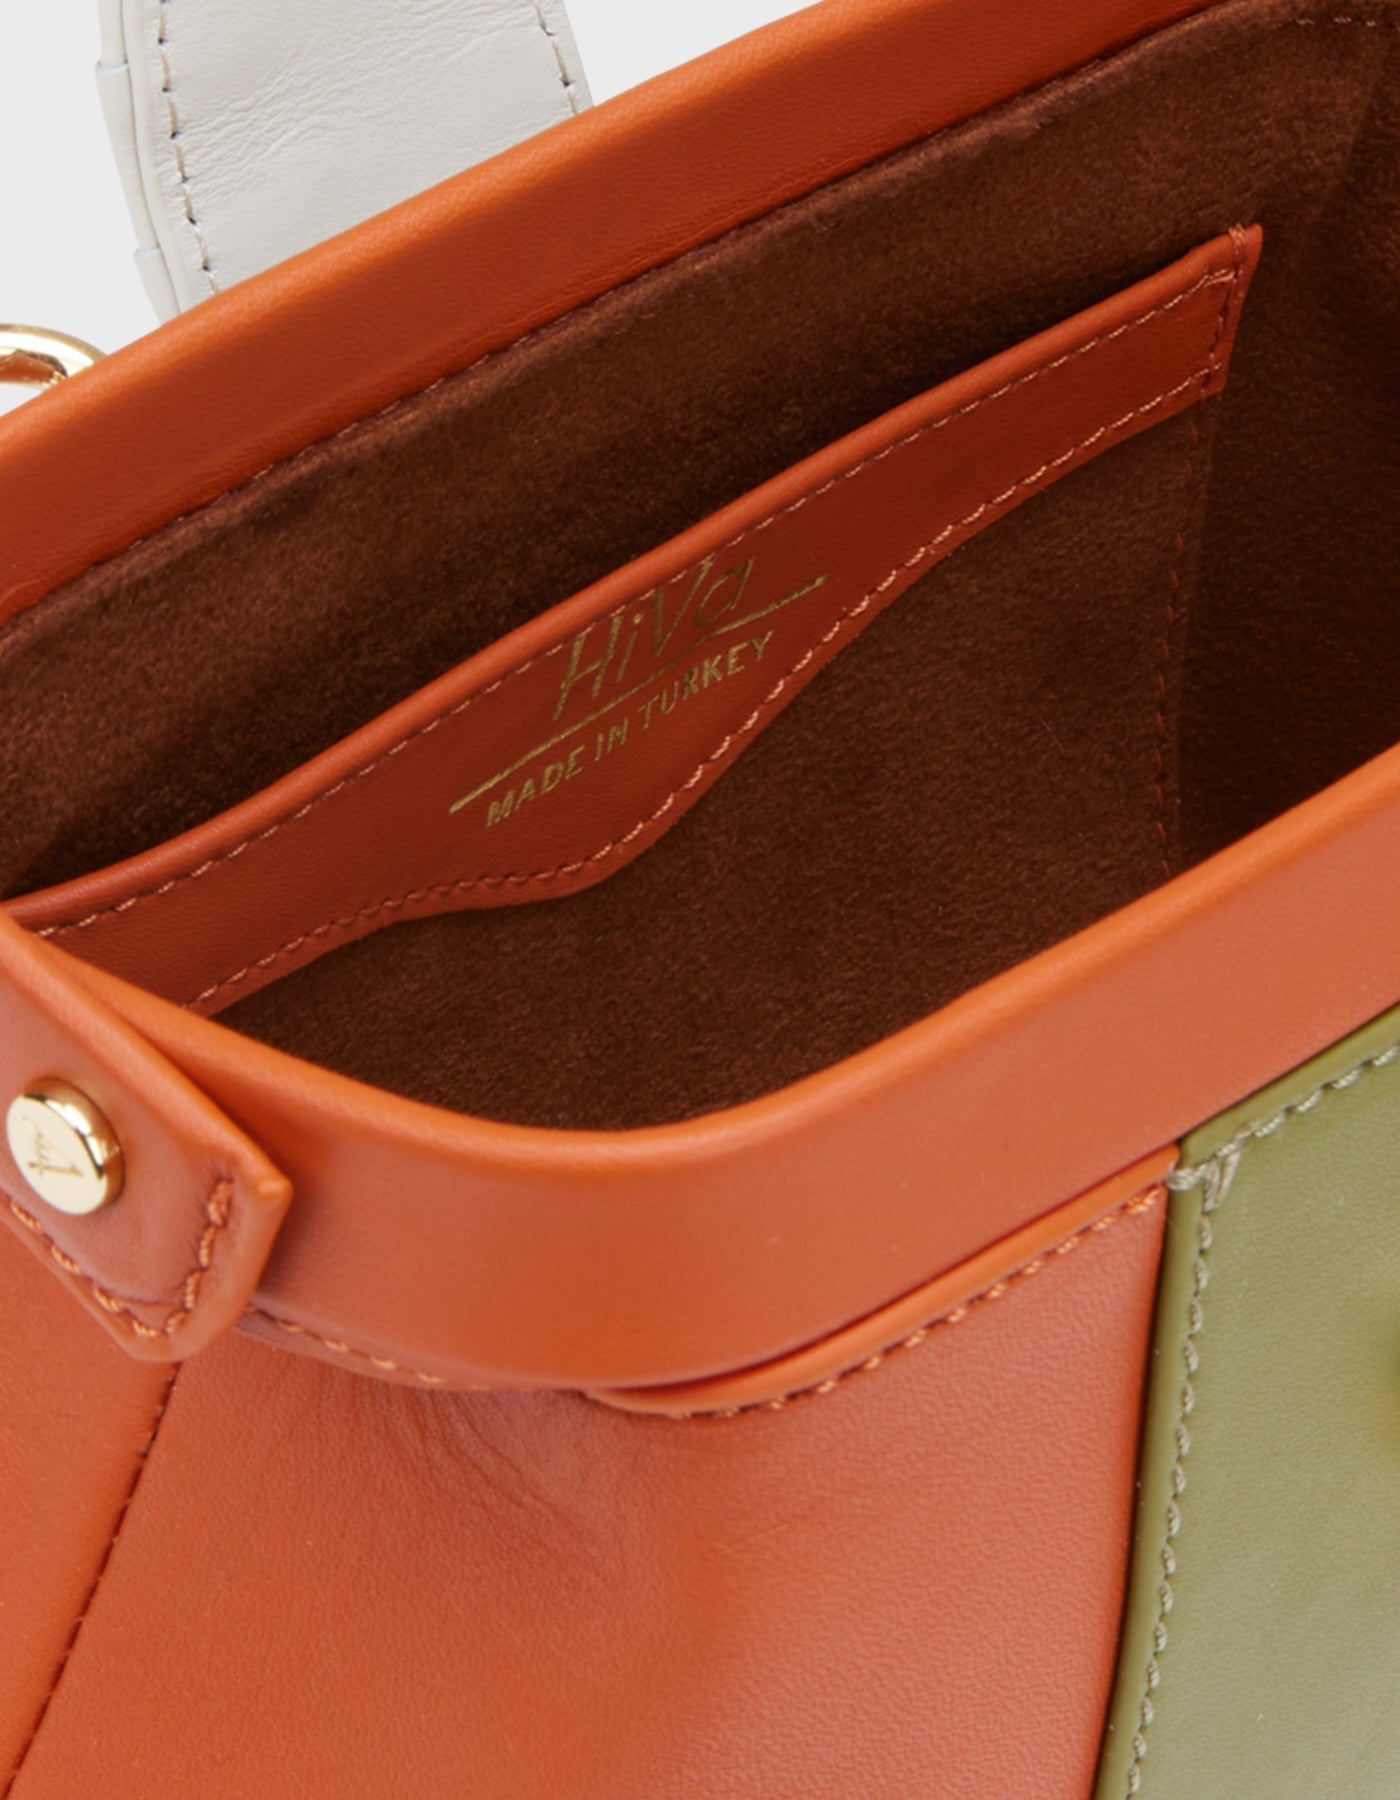 HiVa Atelier | Mini Nubes Doctor Bag Burnt Orange & Olive & Bone | Beautiful and Versatile Leather Accessories